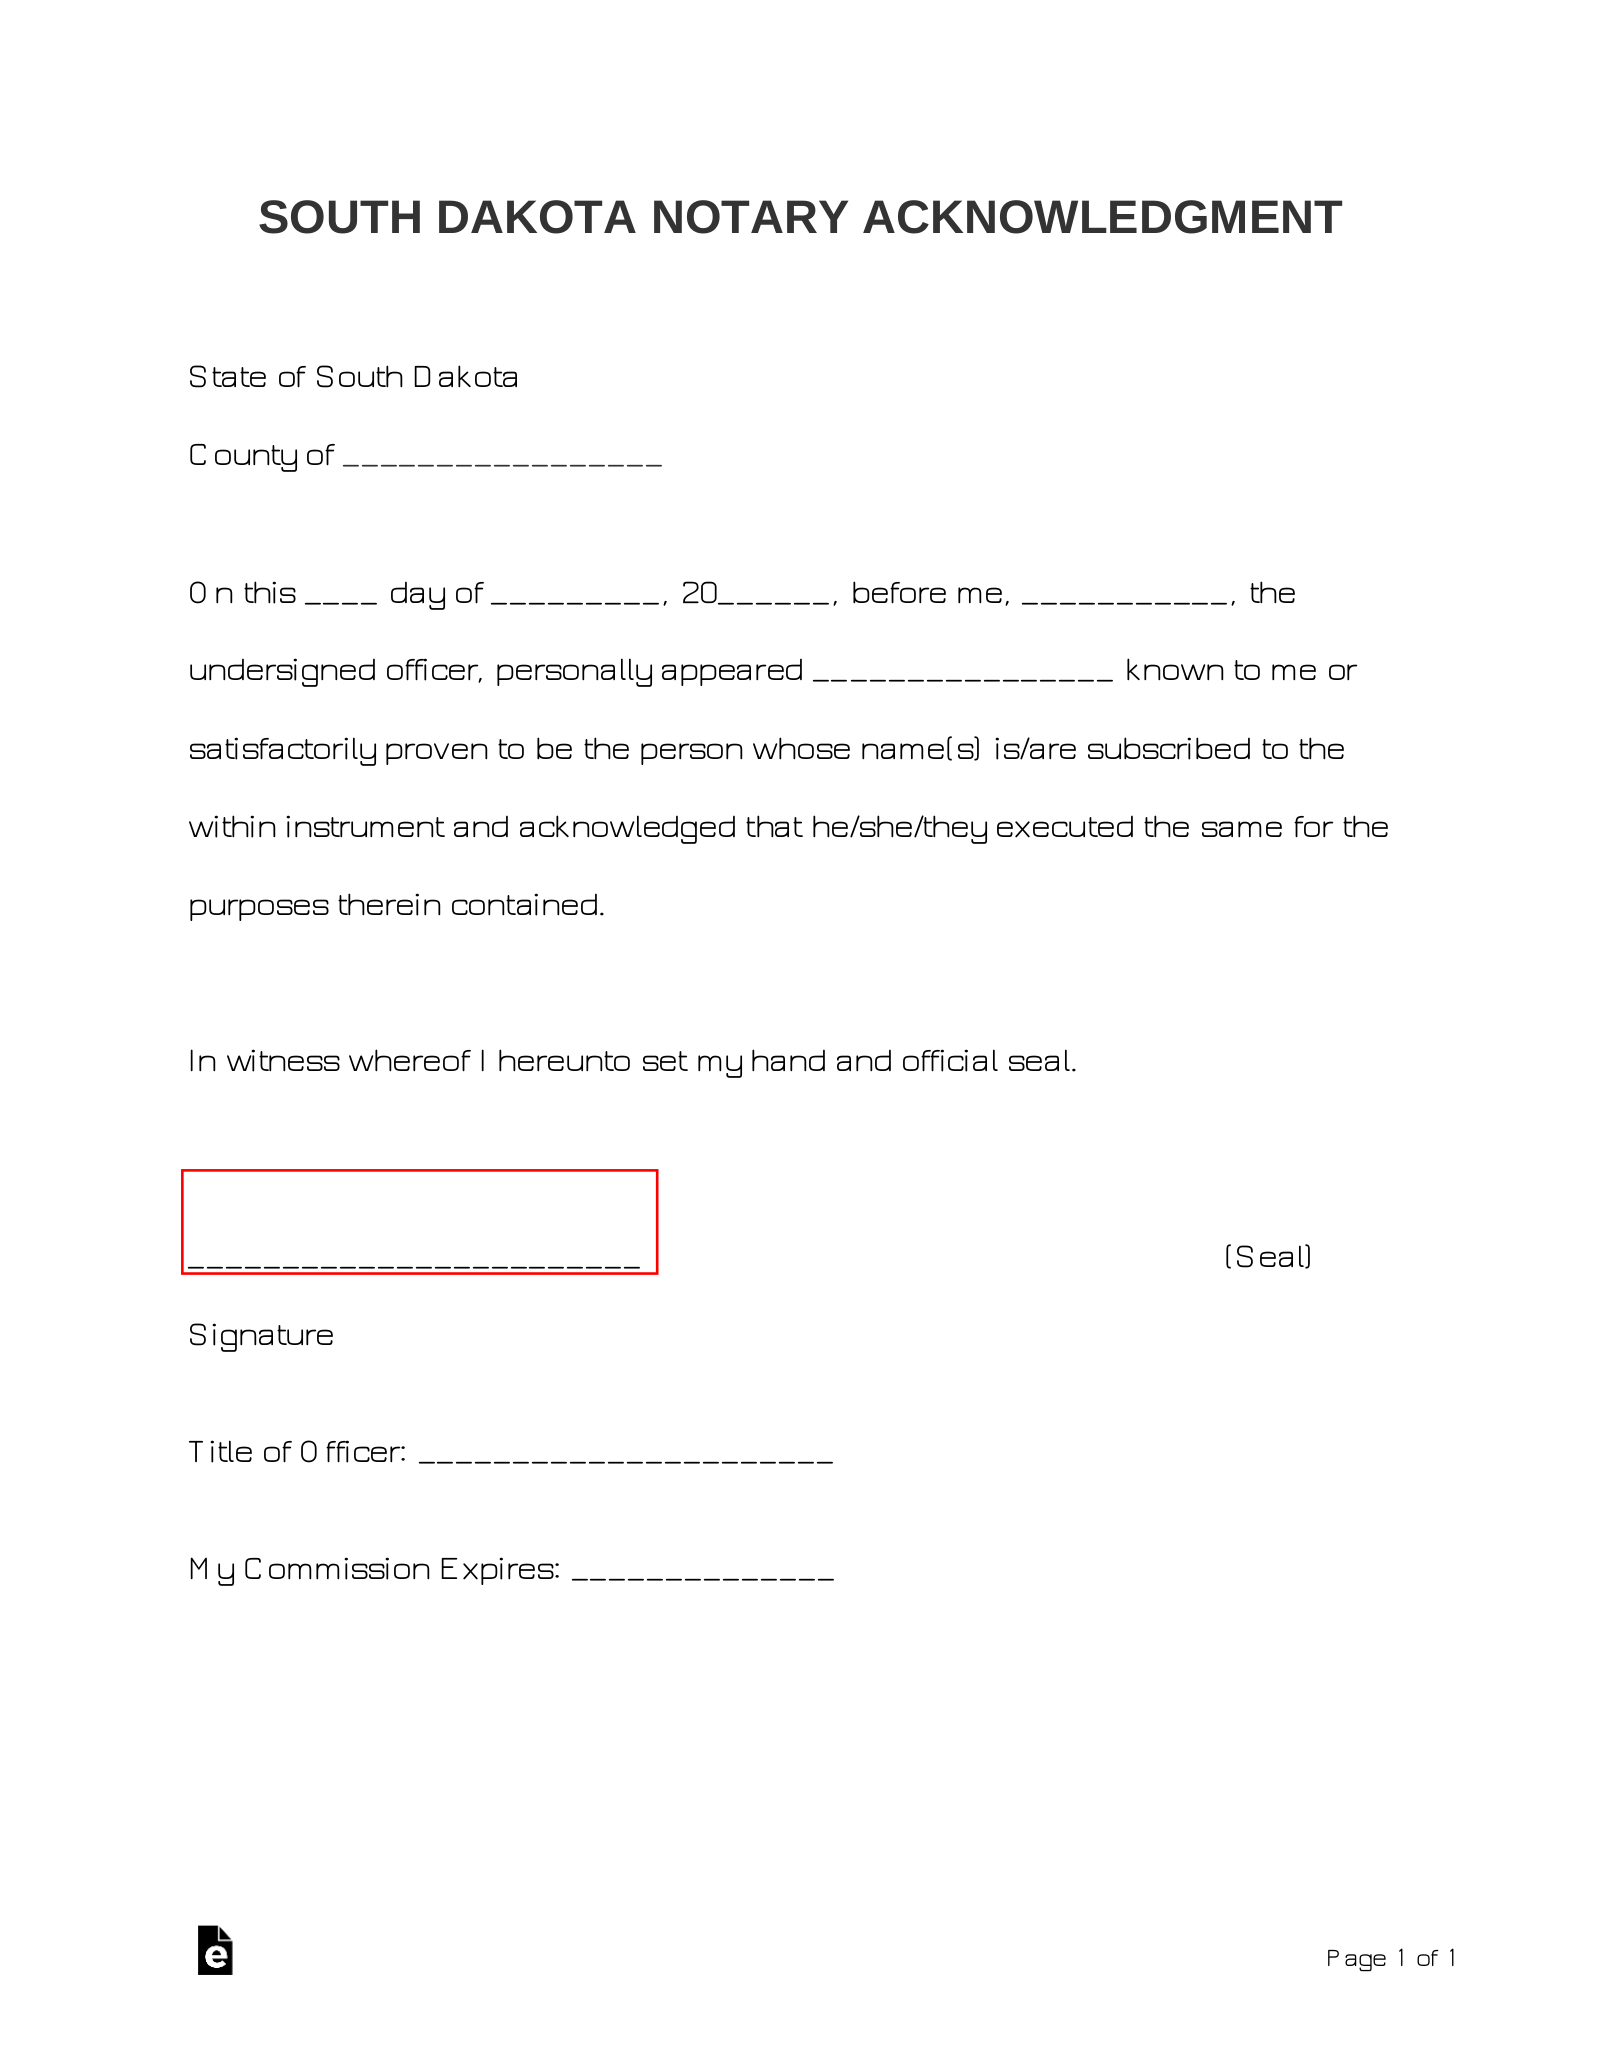 South Dakota Notary Acknowledgment Form